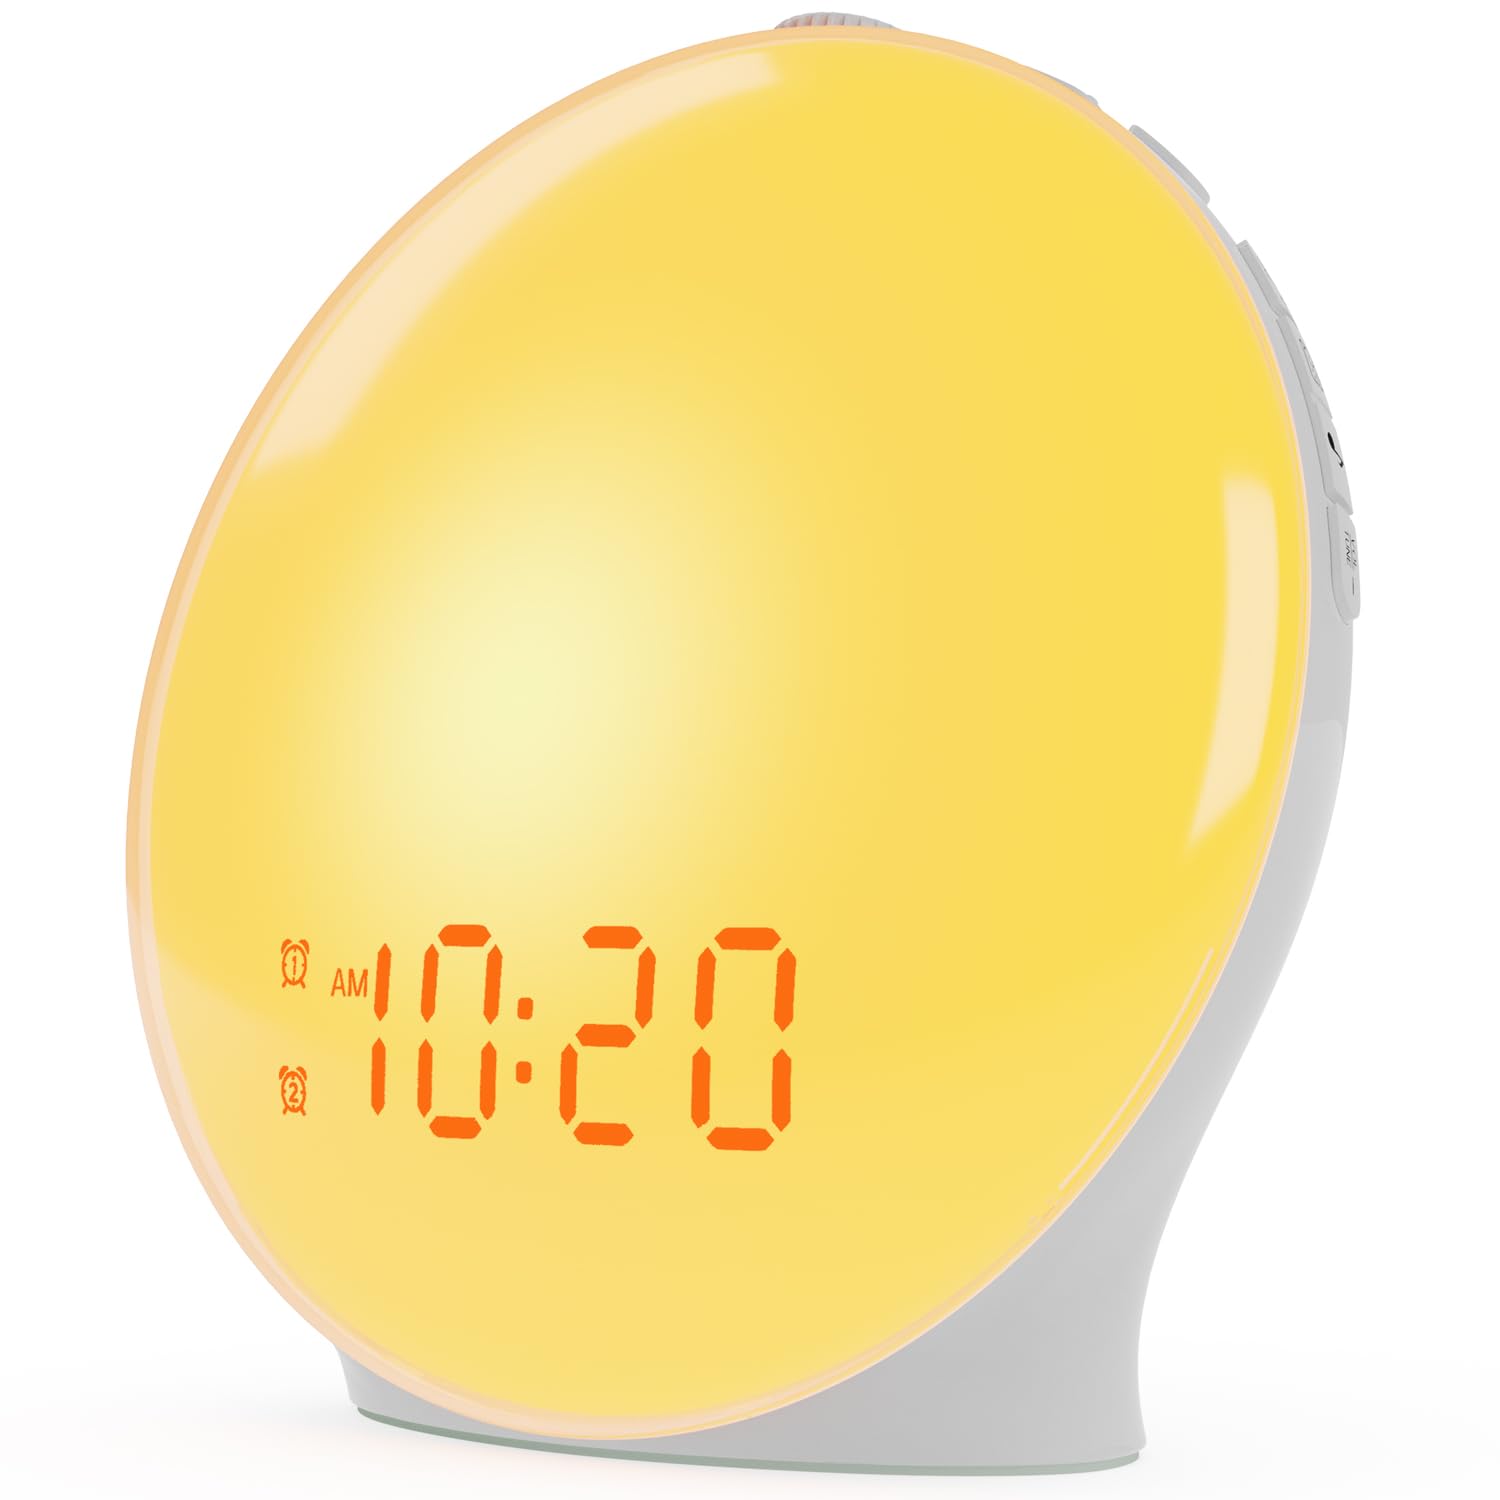 JALL Sunrise Alarm Clock